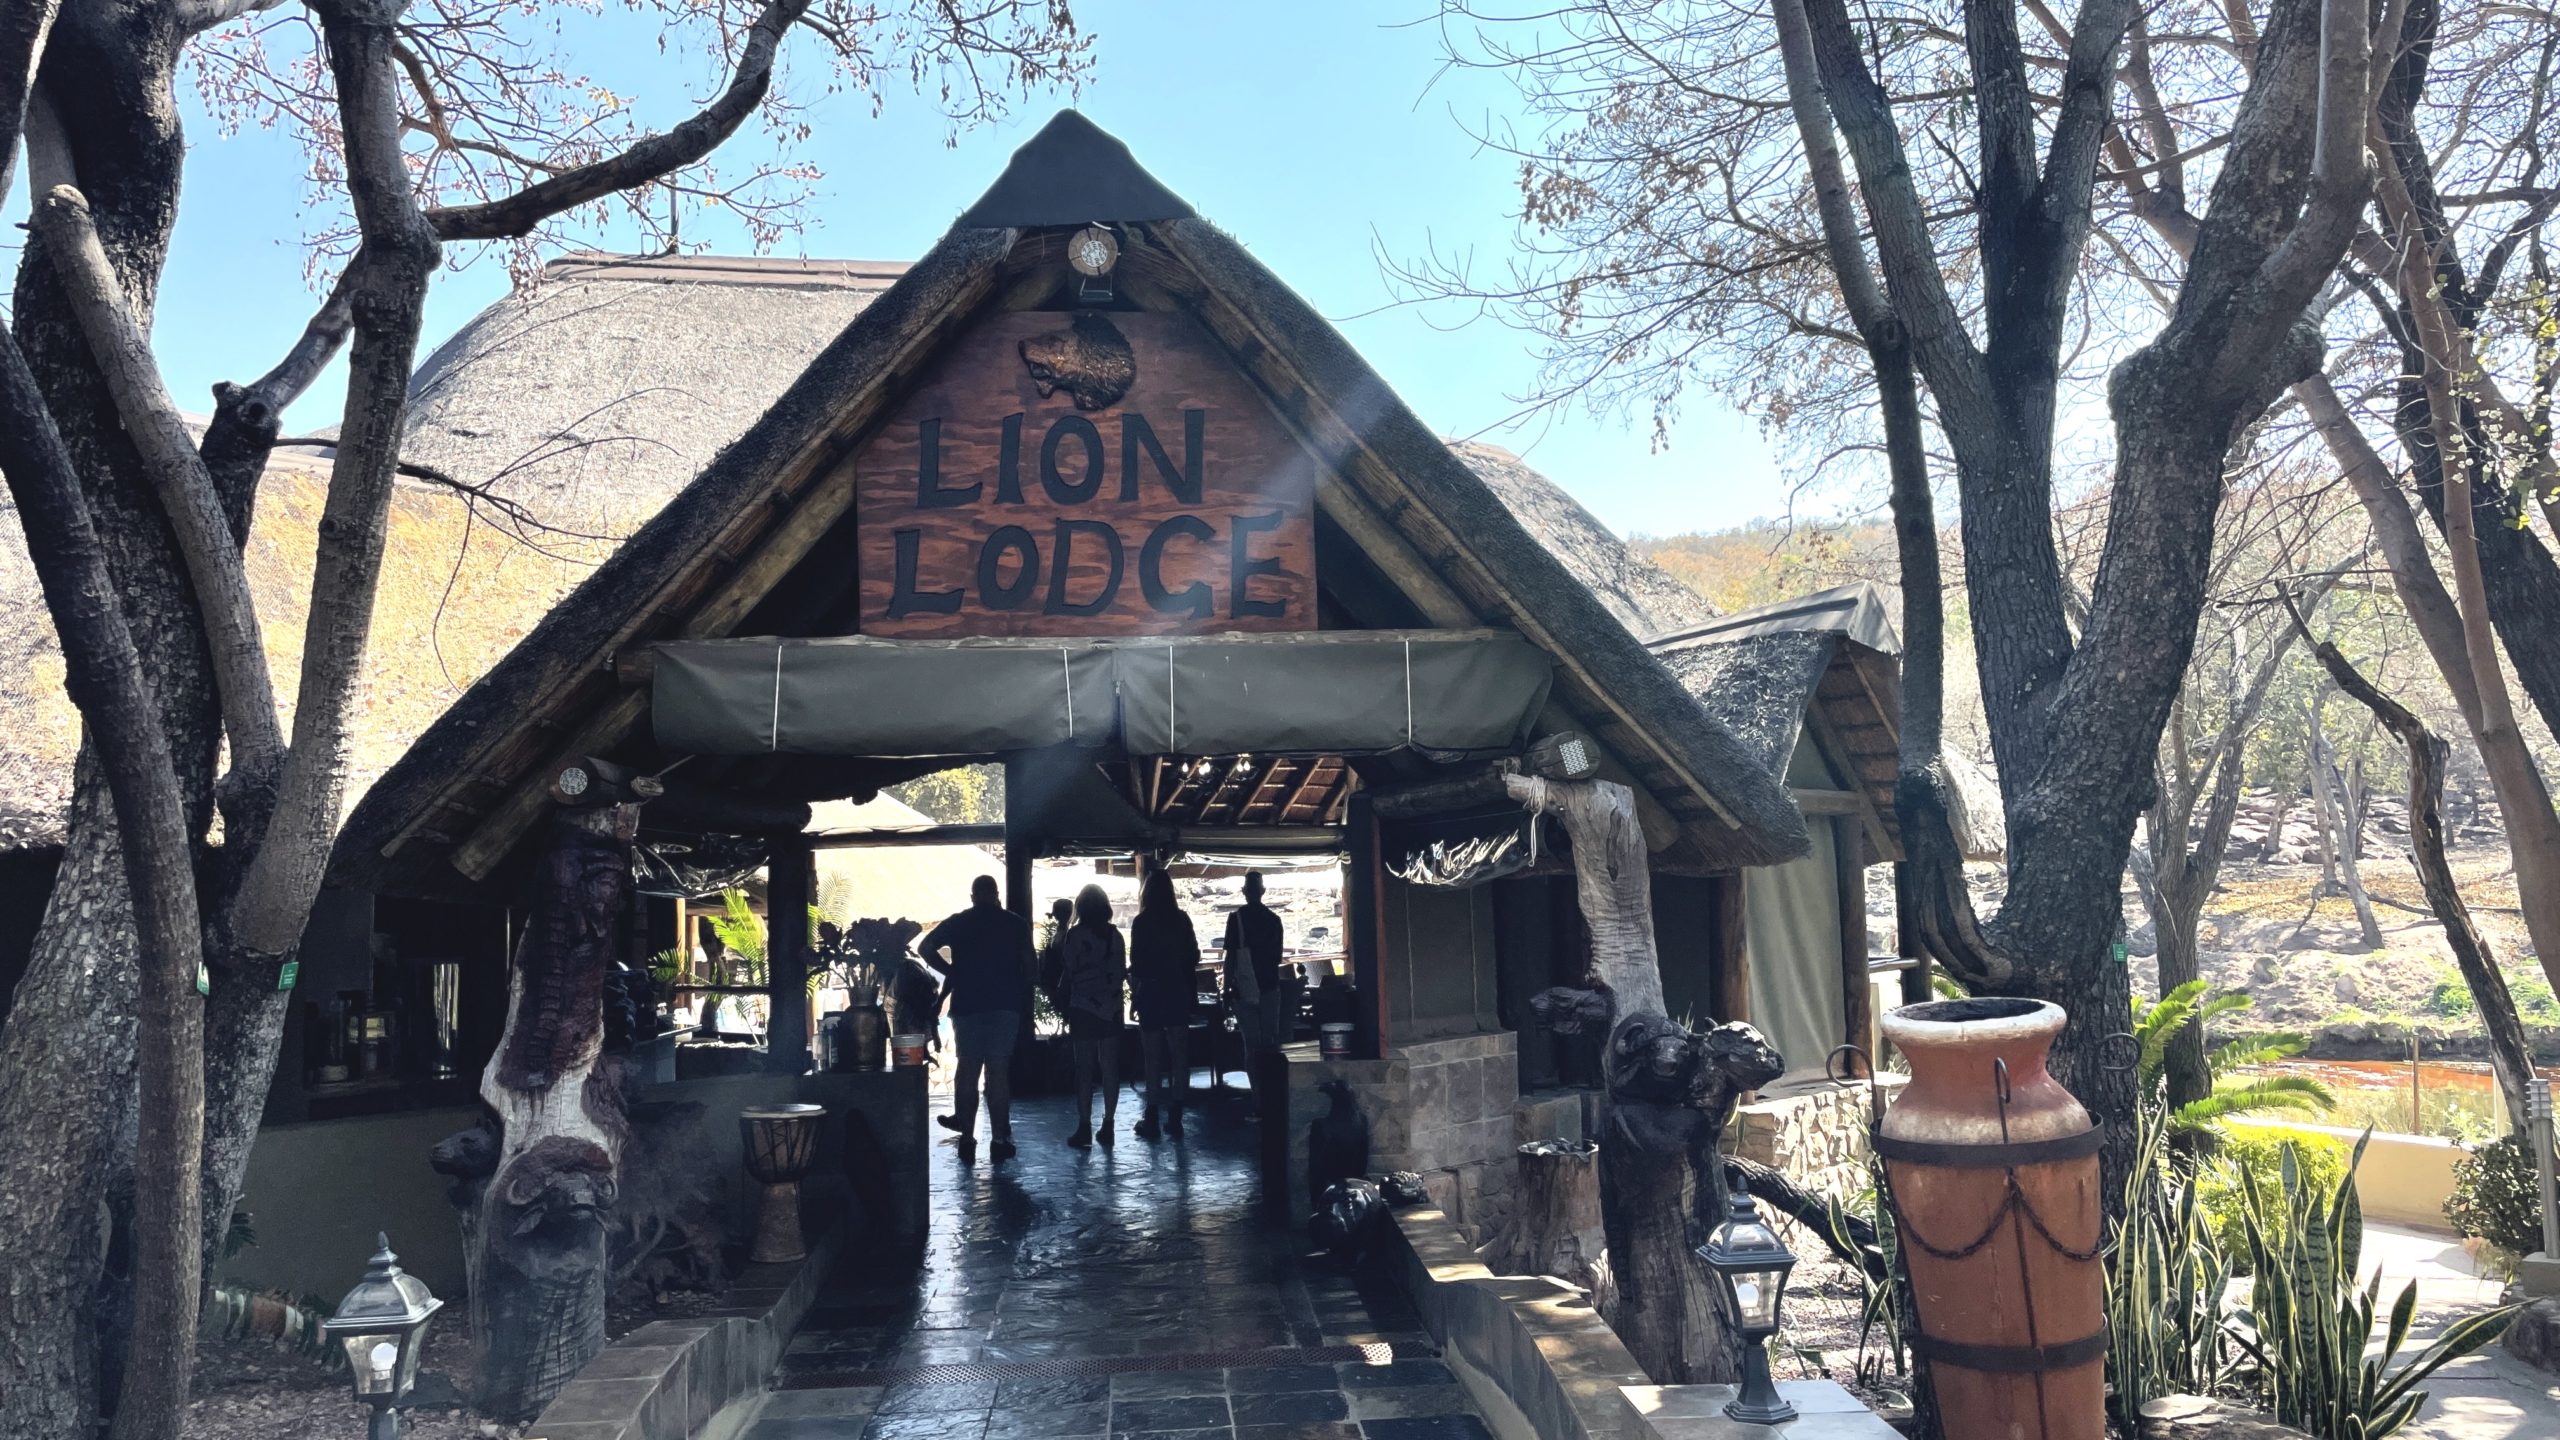 Sabatana Private Reserve Lion Lodge entry